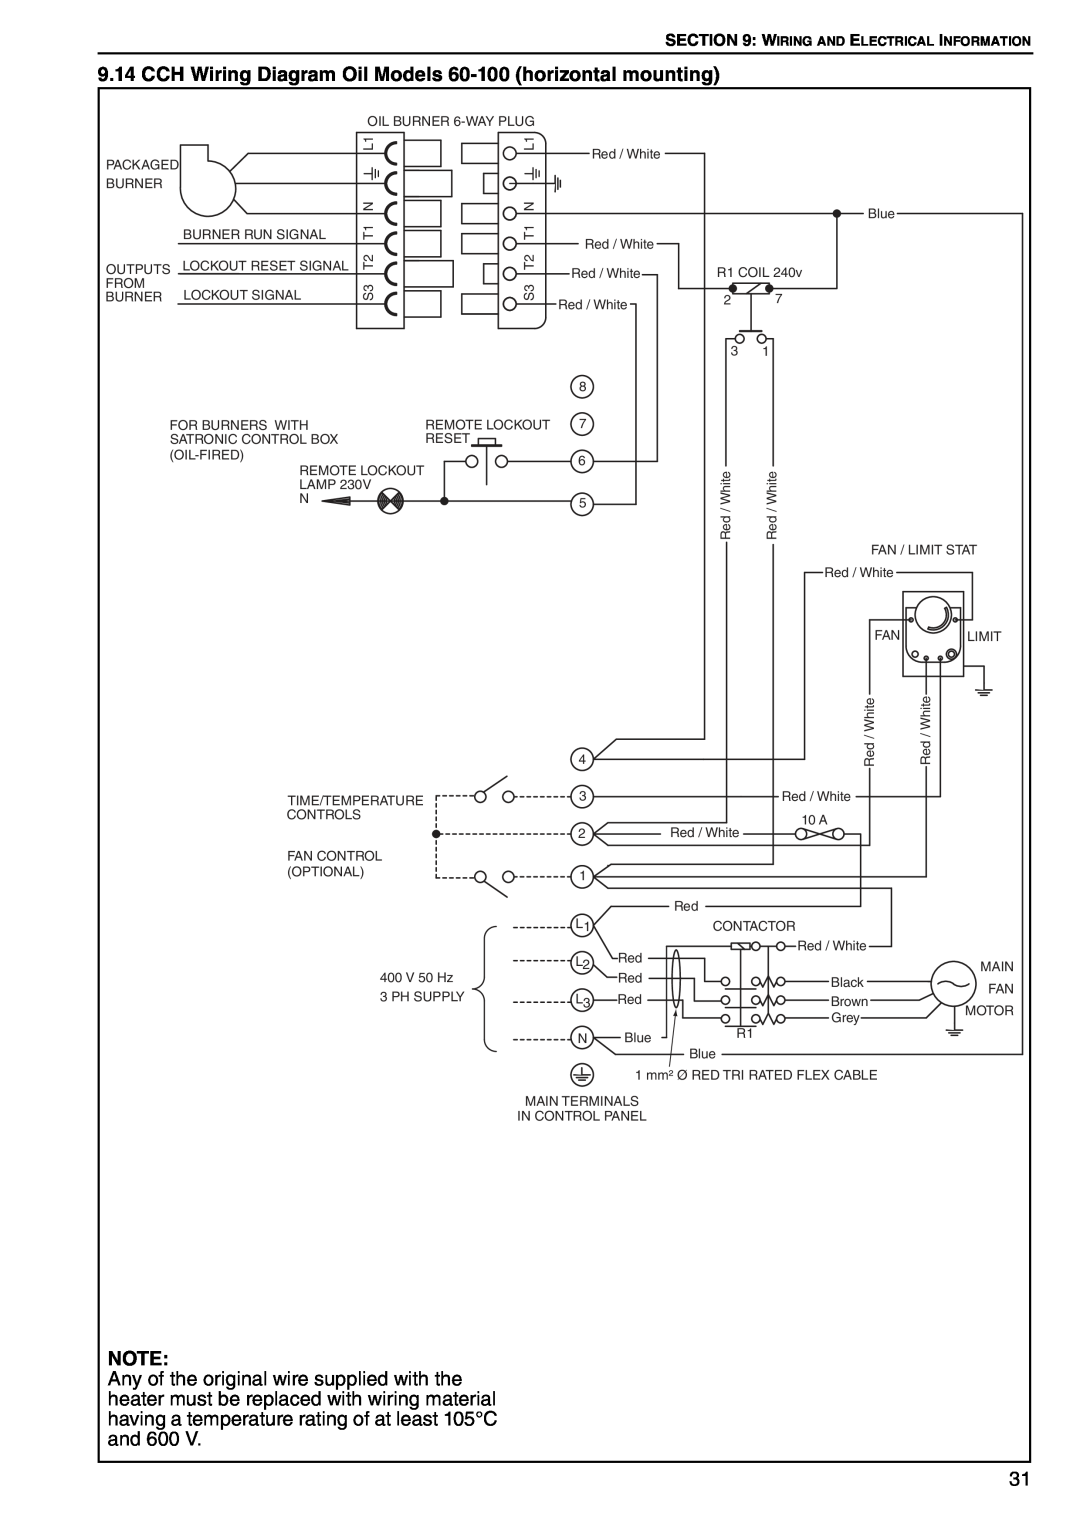 Roberts Gorden POP-ECA/PGP-ECA 015 to 0100 service manual CCH Wiring Diagram Oil Models 60-100 horizontal mounting 